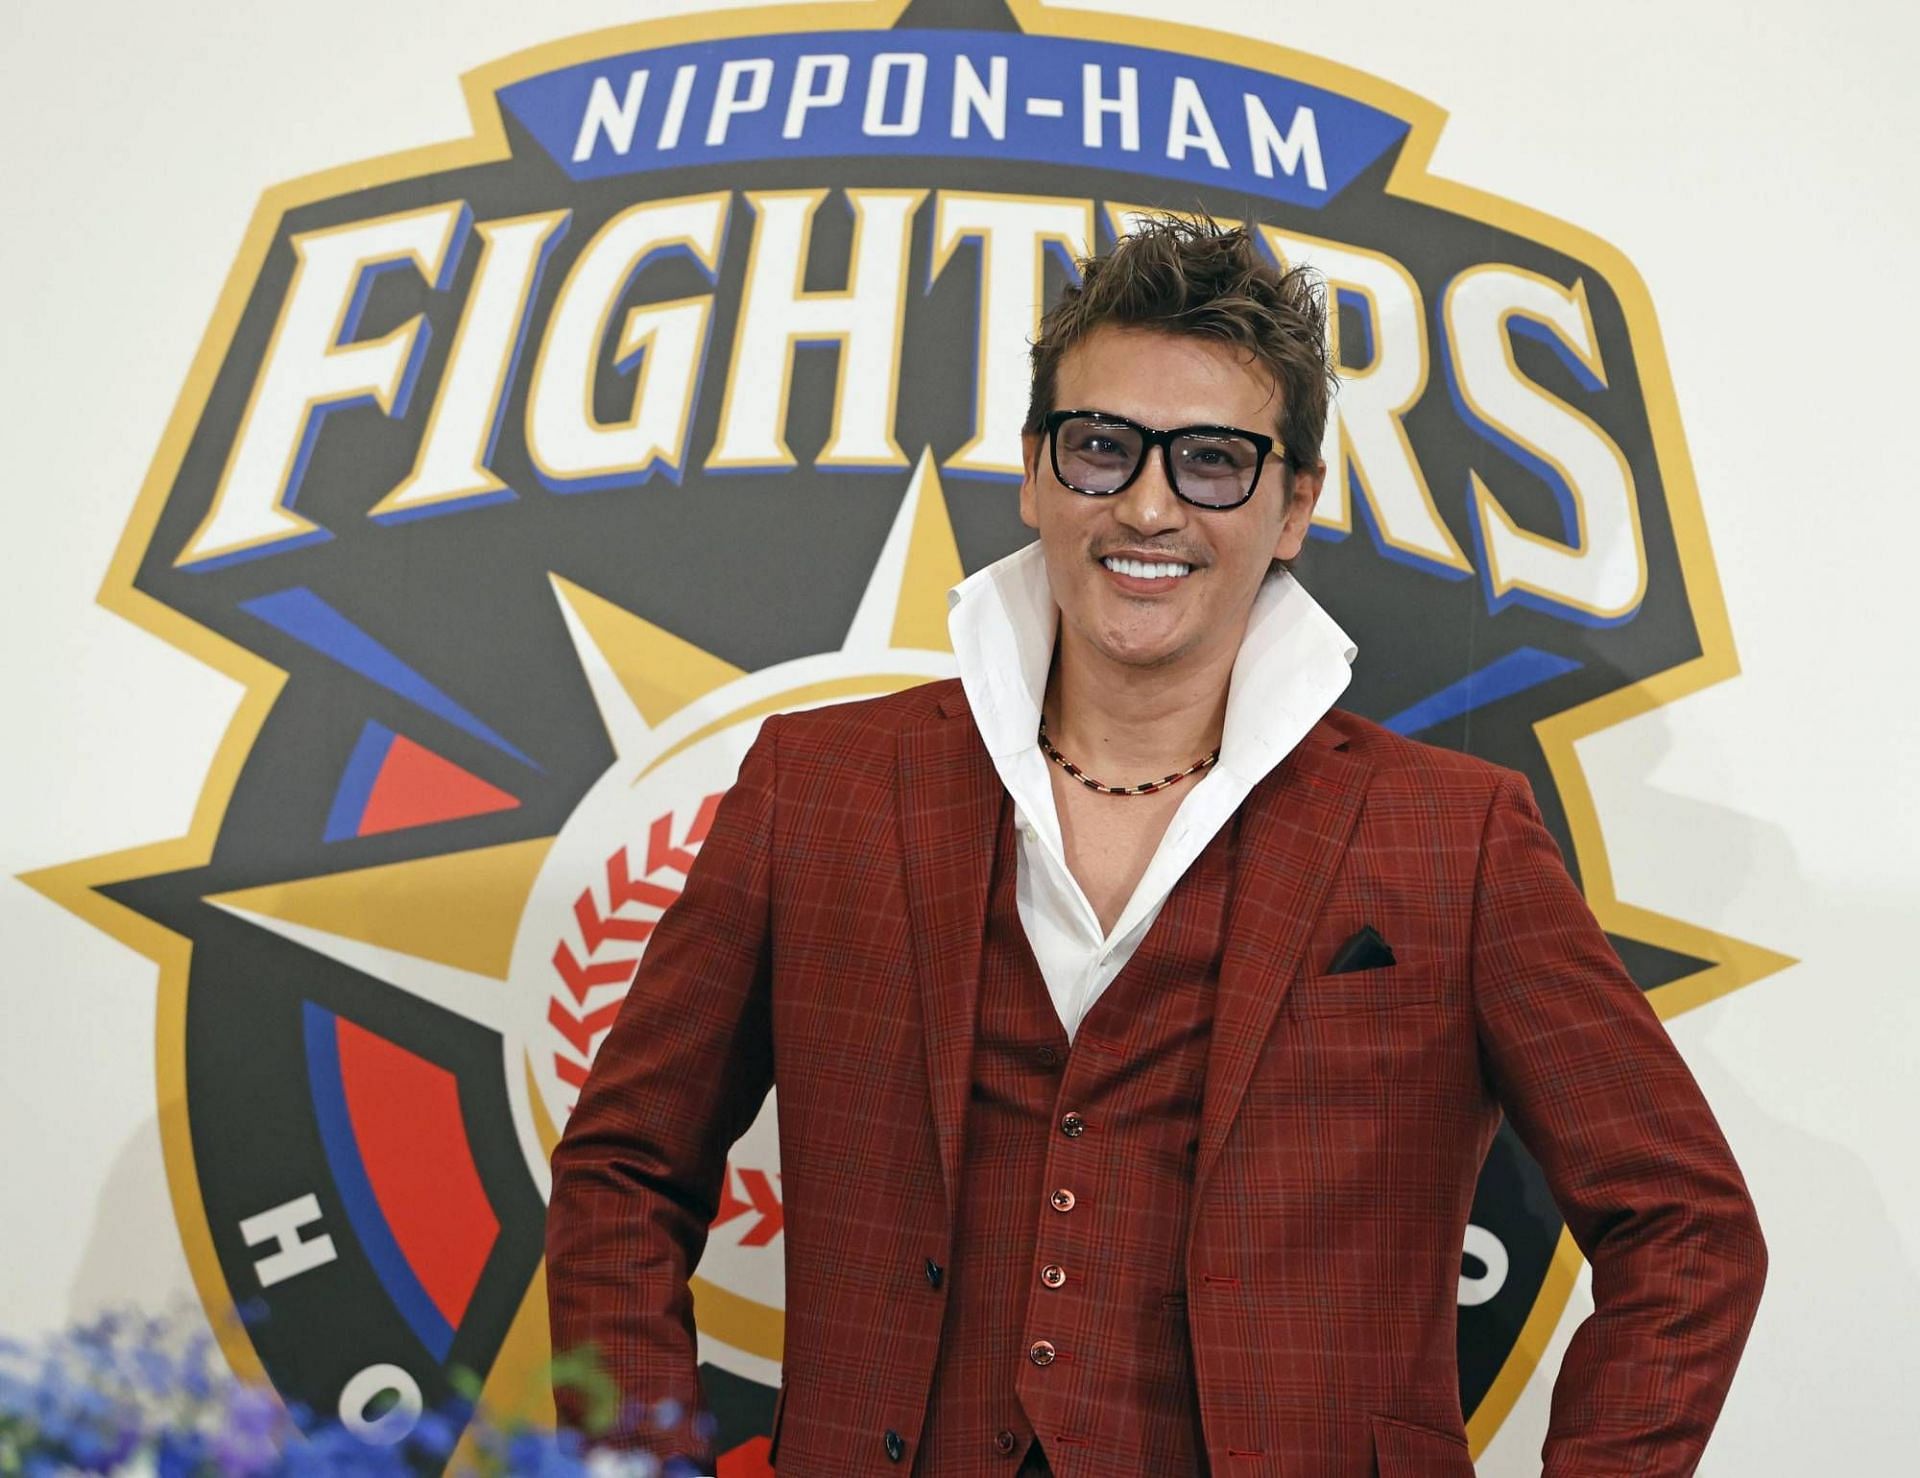 Baseball: NPB season opener at new Hokkaido ballpark Baseball fans pack the Nippon  Ham Fighters new